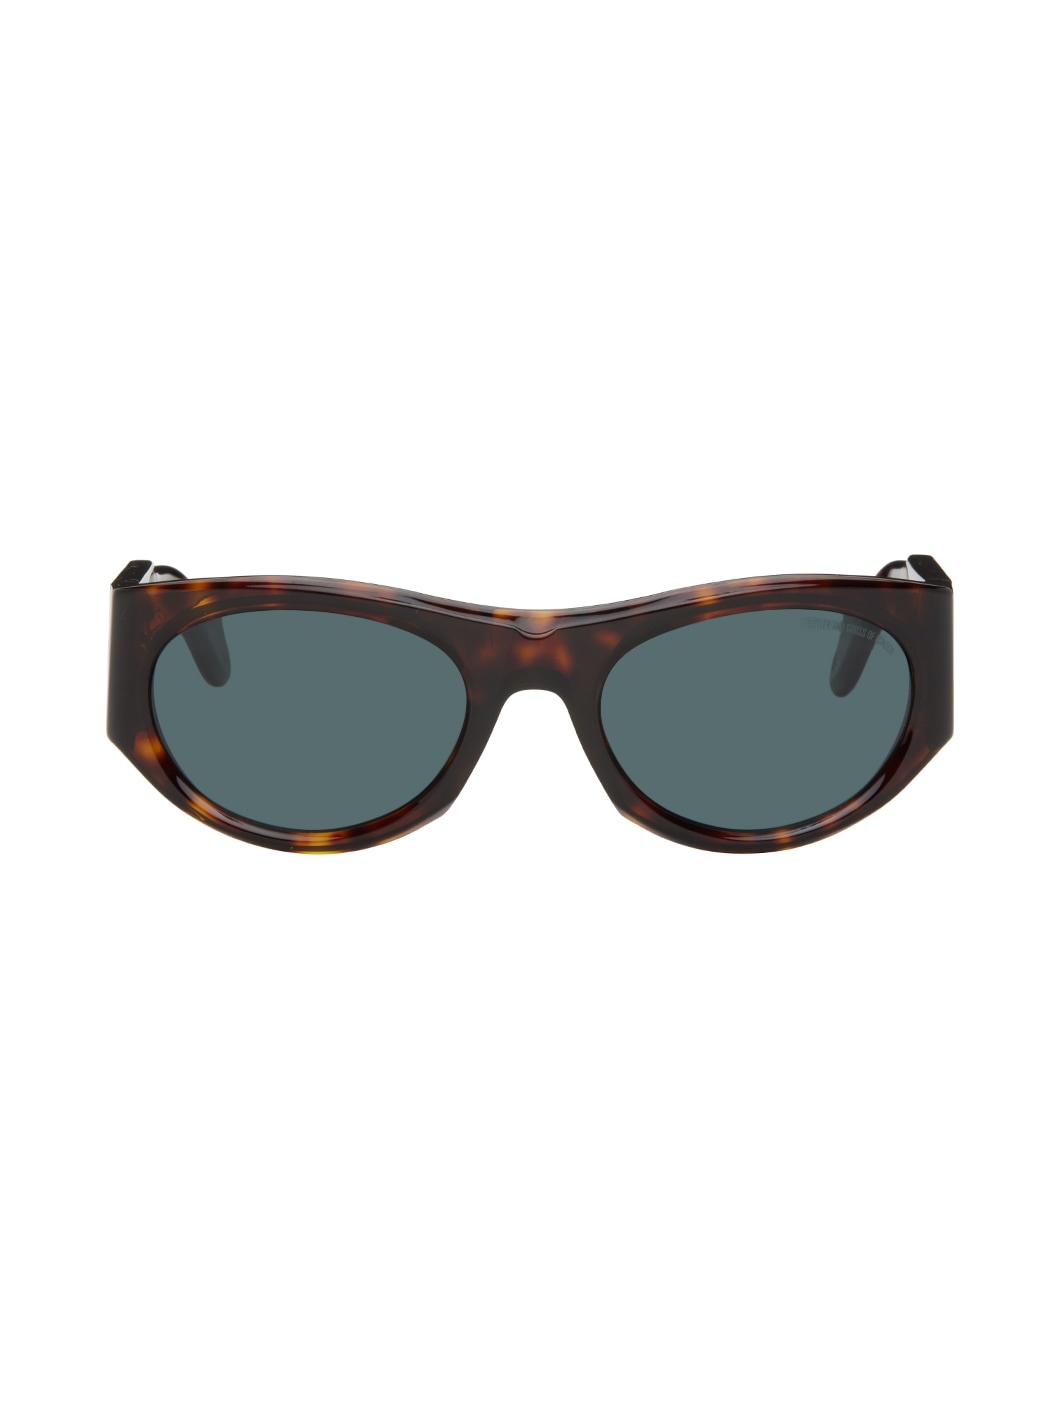 Tortoiseshell 9276 Sunglasses - 1